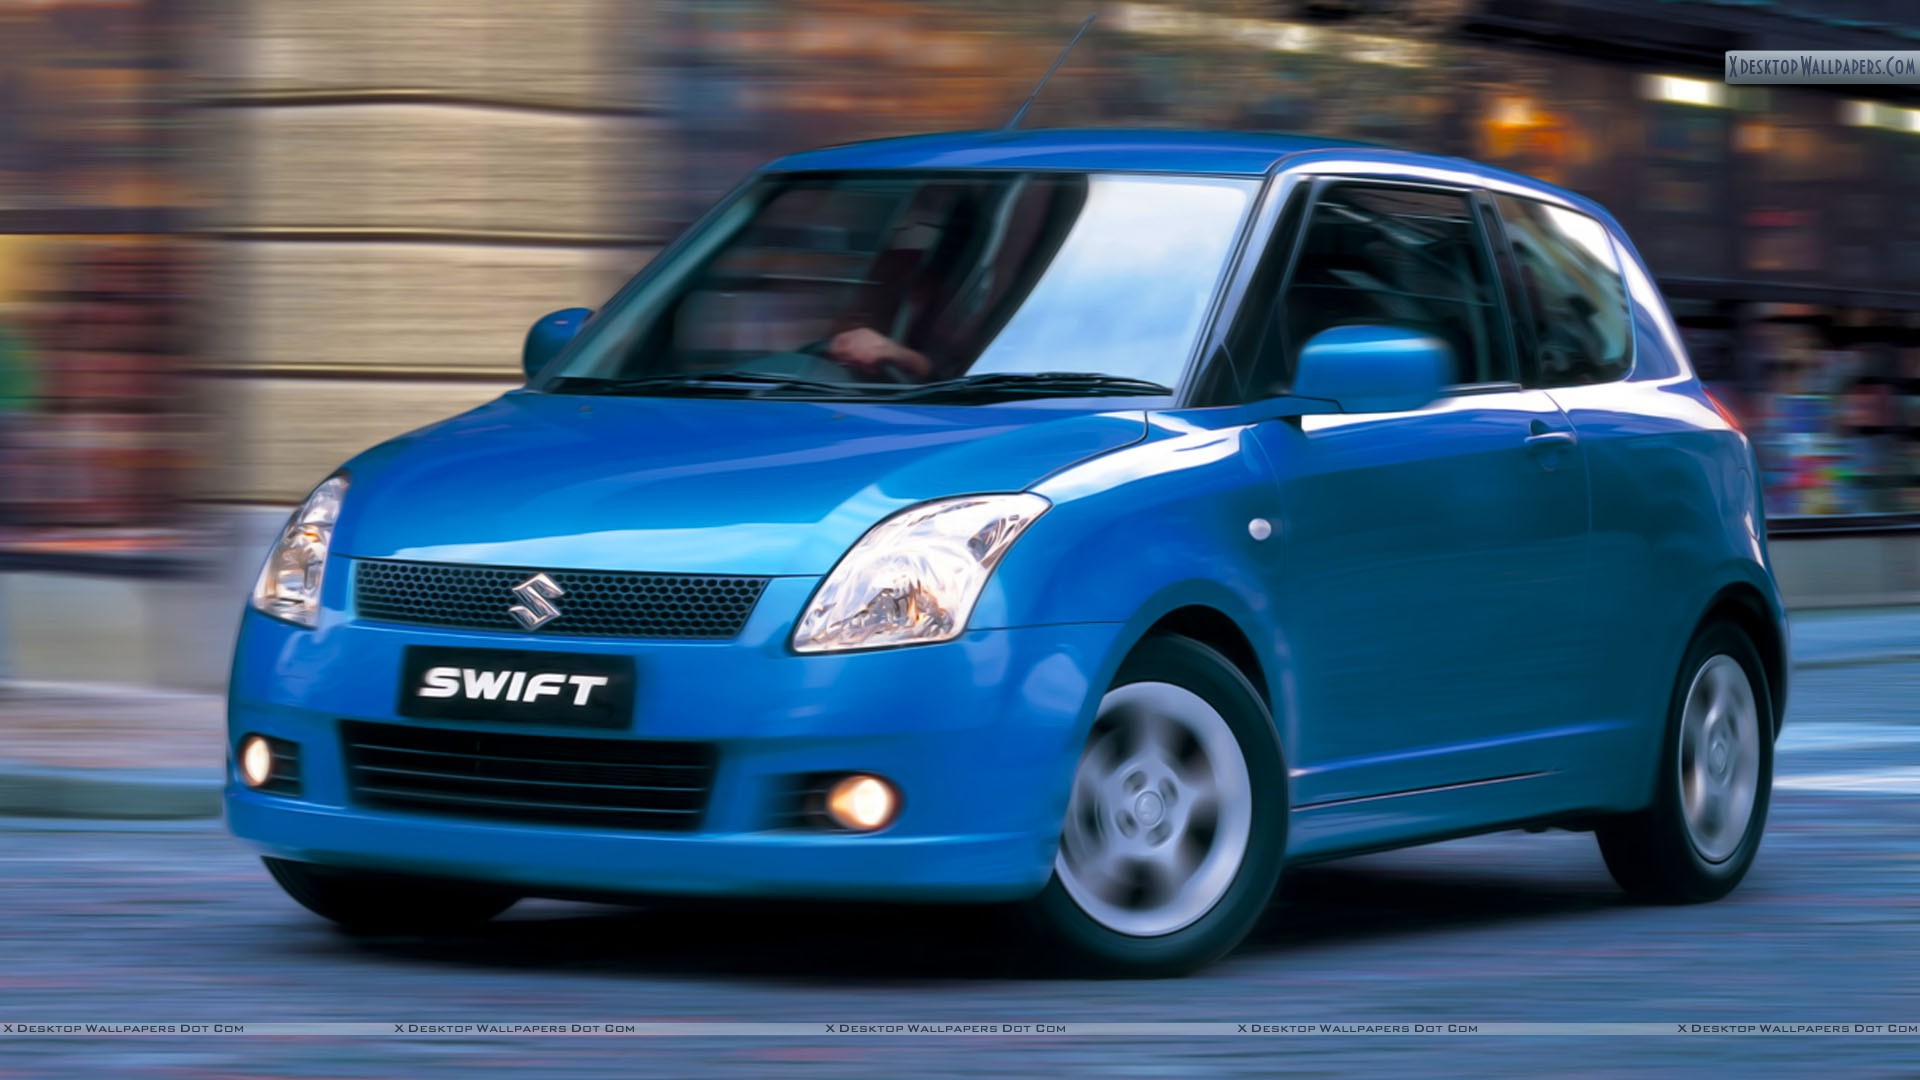 Suzuki Swift Wallpapers, Photos & Images in HD